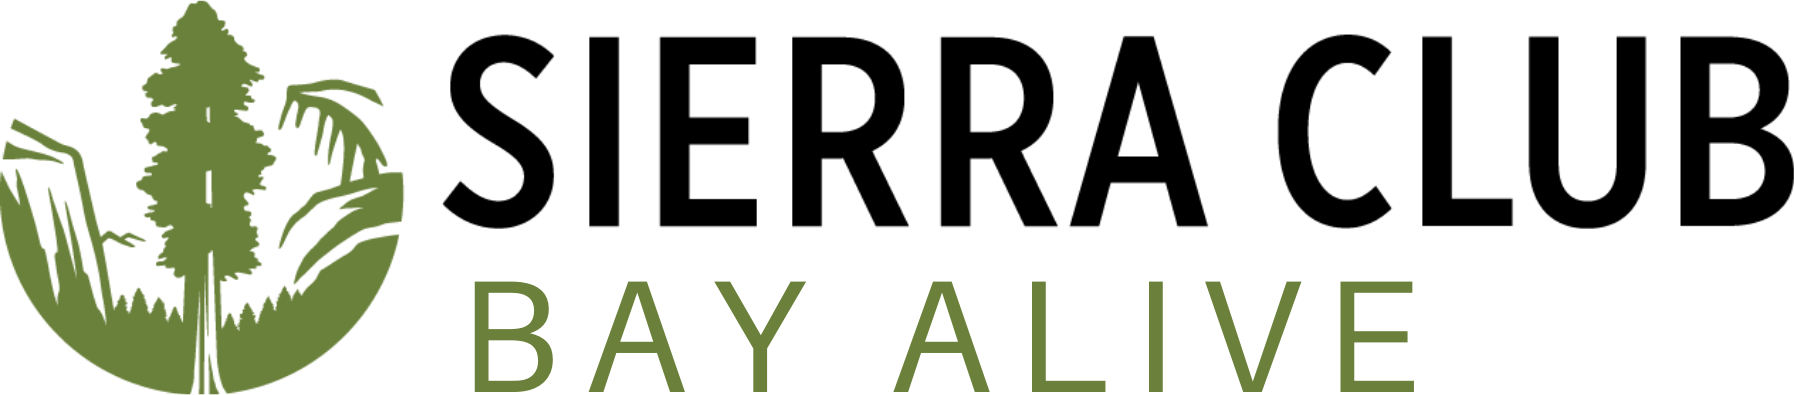 San Francisco Bay Alive Campaign chapter logo